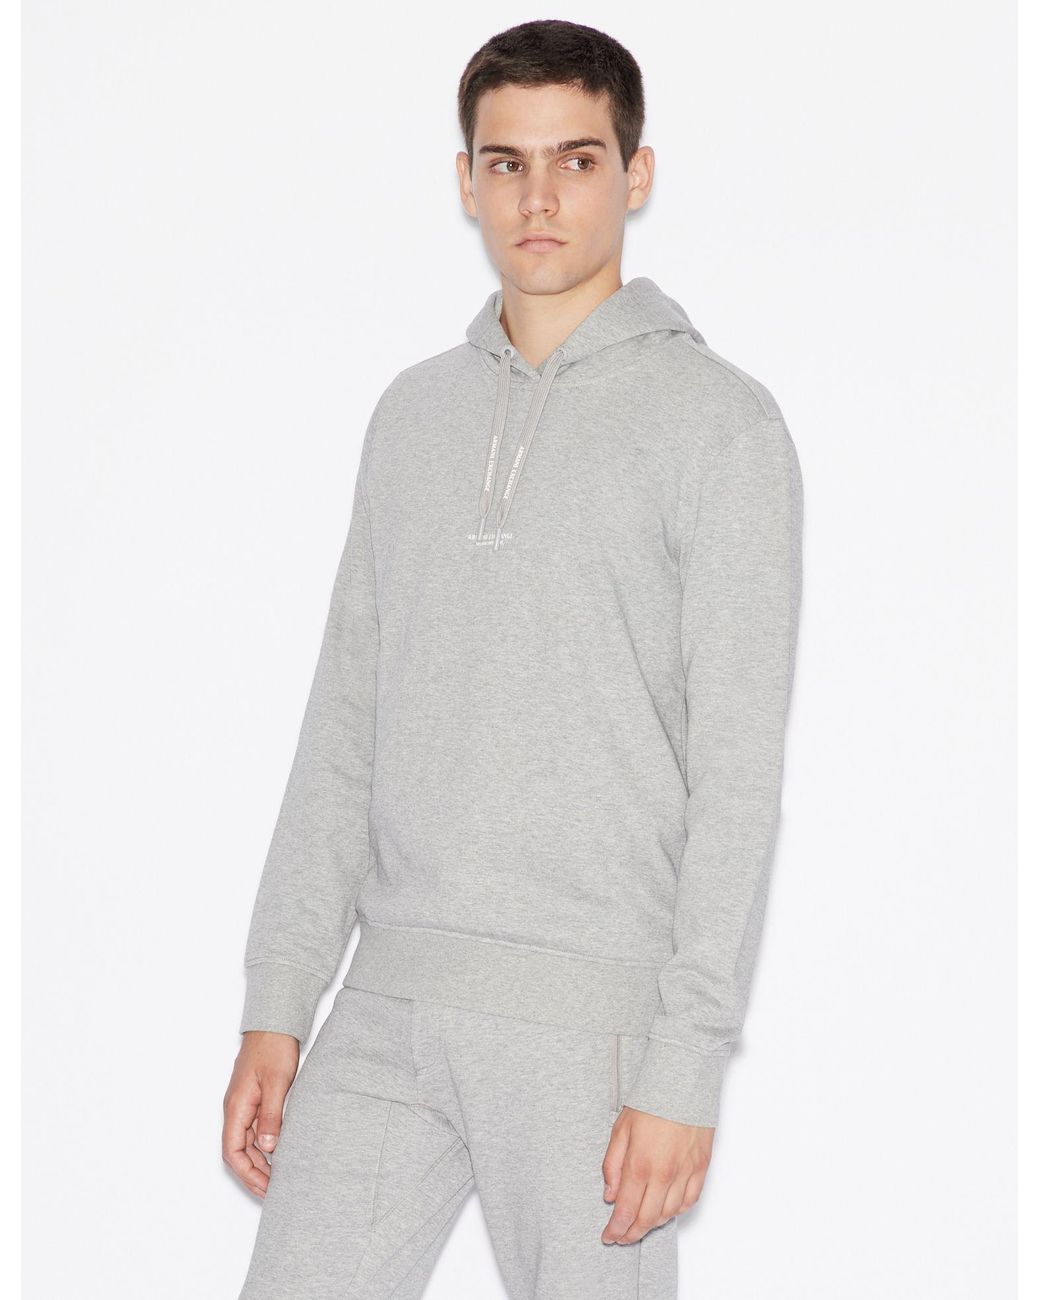 Armani Exchange Fleece Hooded Sweatshirt in Grey (Gray) for Men - Lyst